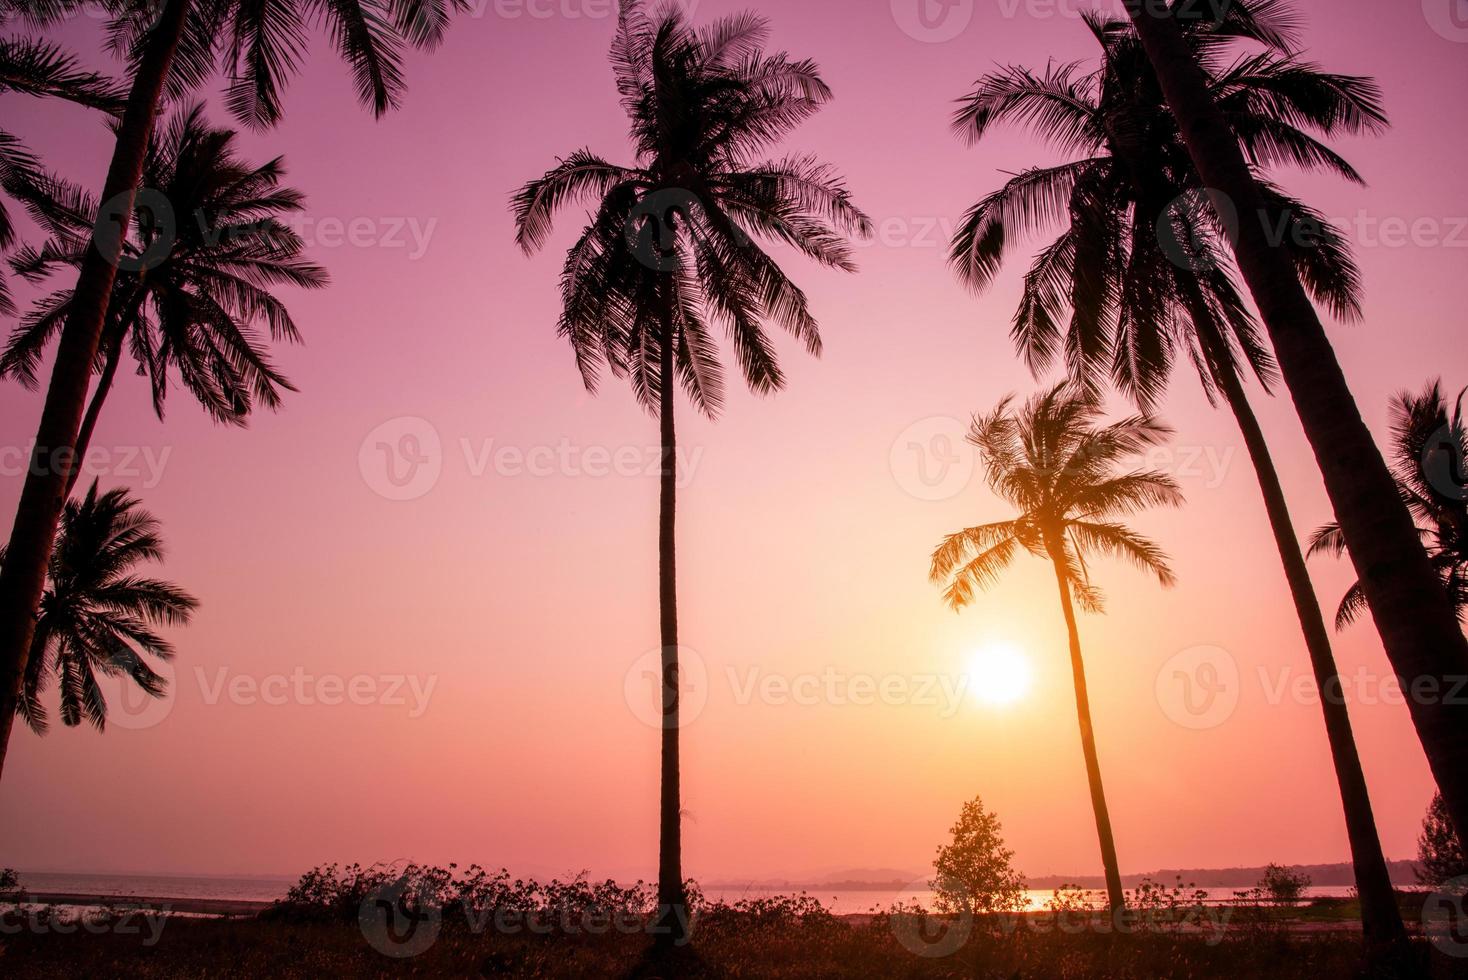 Silhouette Kokospalmen am Strand bei Sonnenuntergang. Vintage-Ton. foto